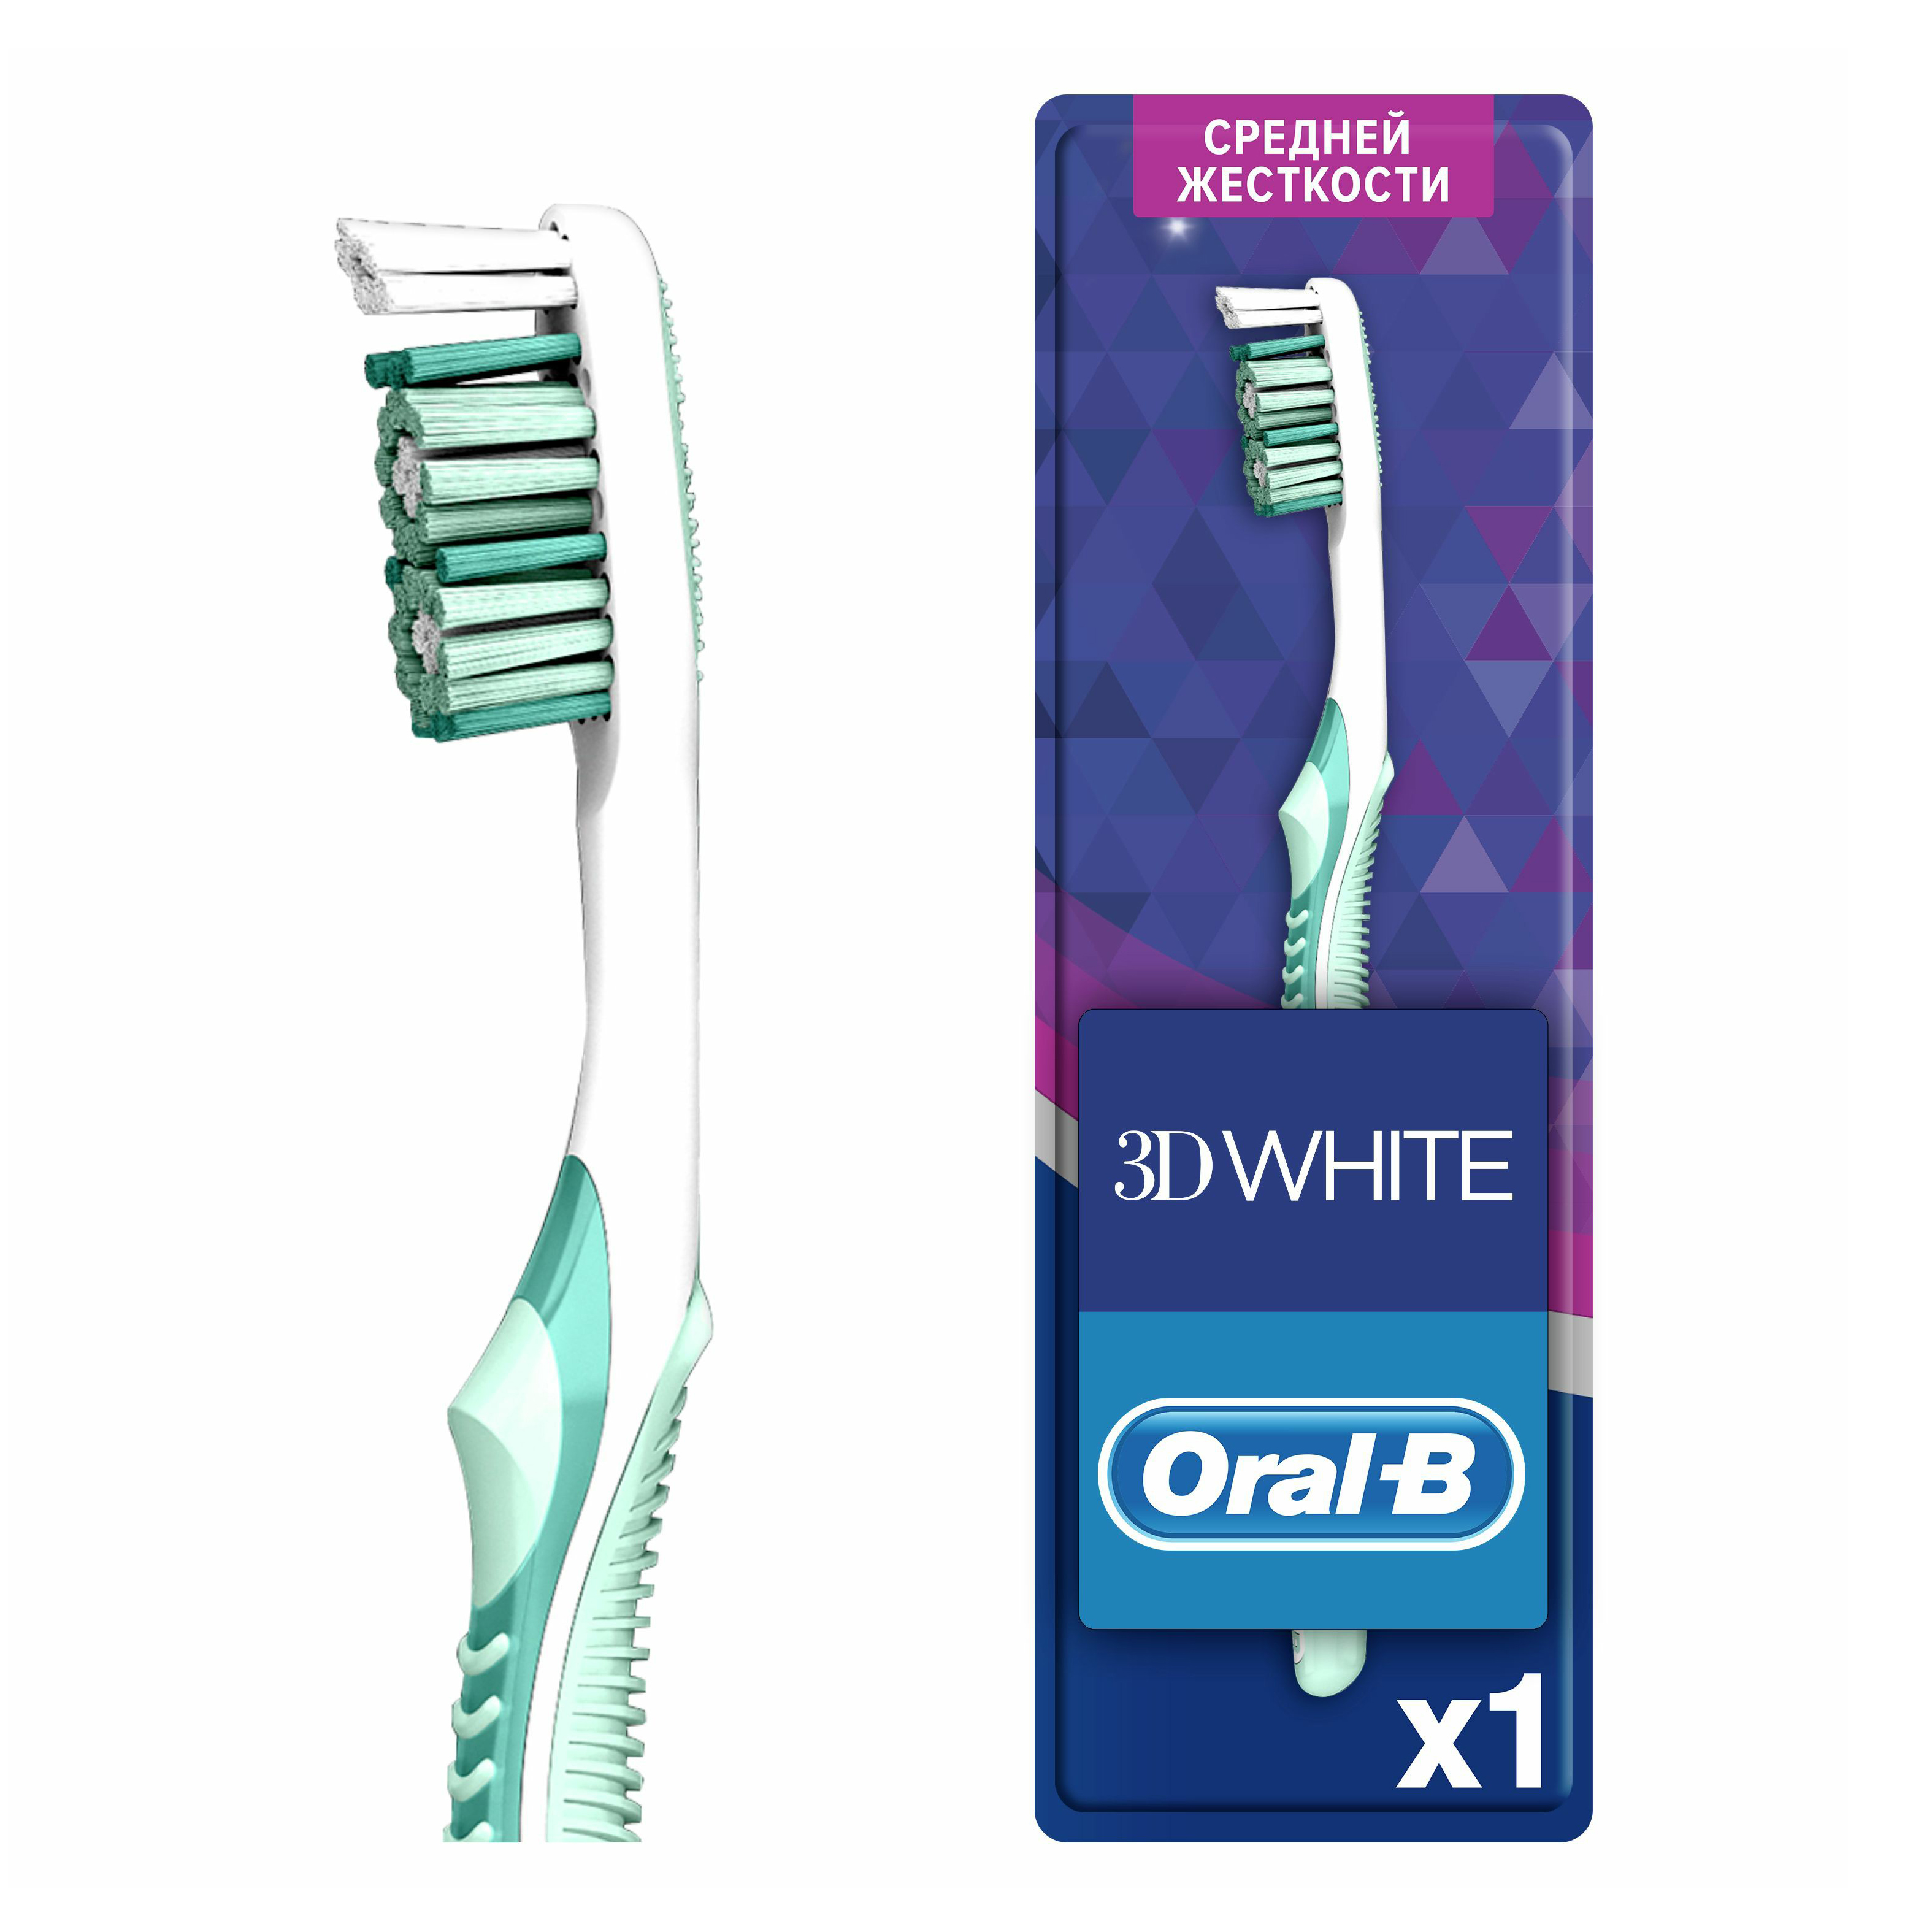 Купить Зубная щетка Oral-B 3D White Whitening средней жесткости